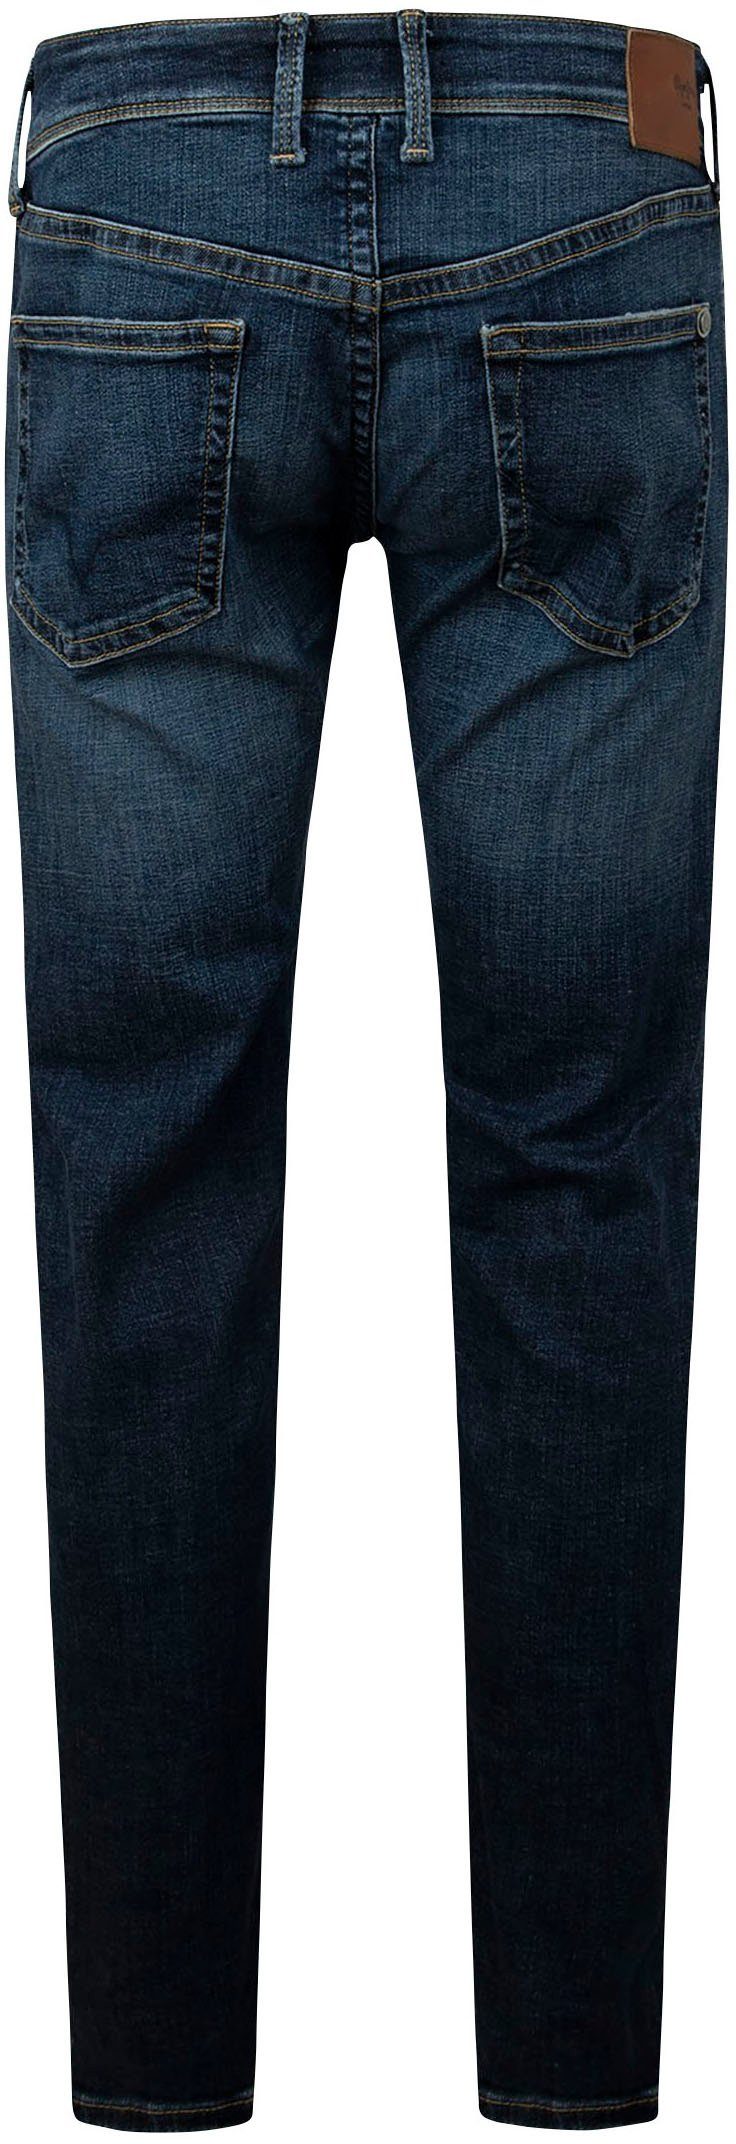 Pepe HATCH Jeans dark-used Slim-fit-Jeans